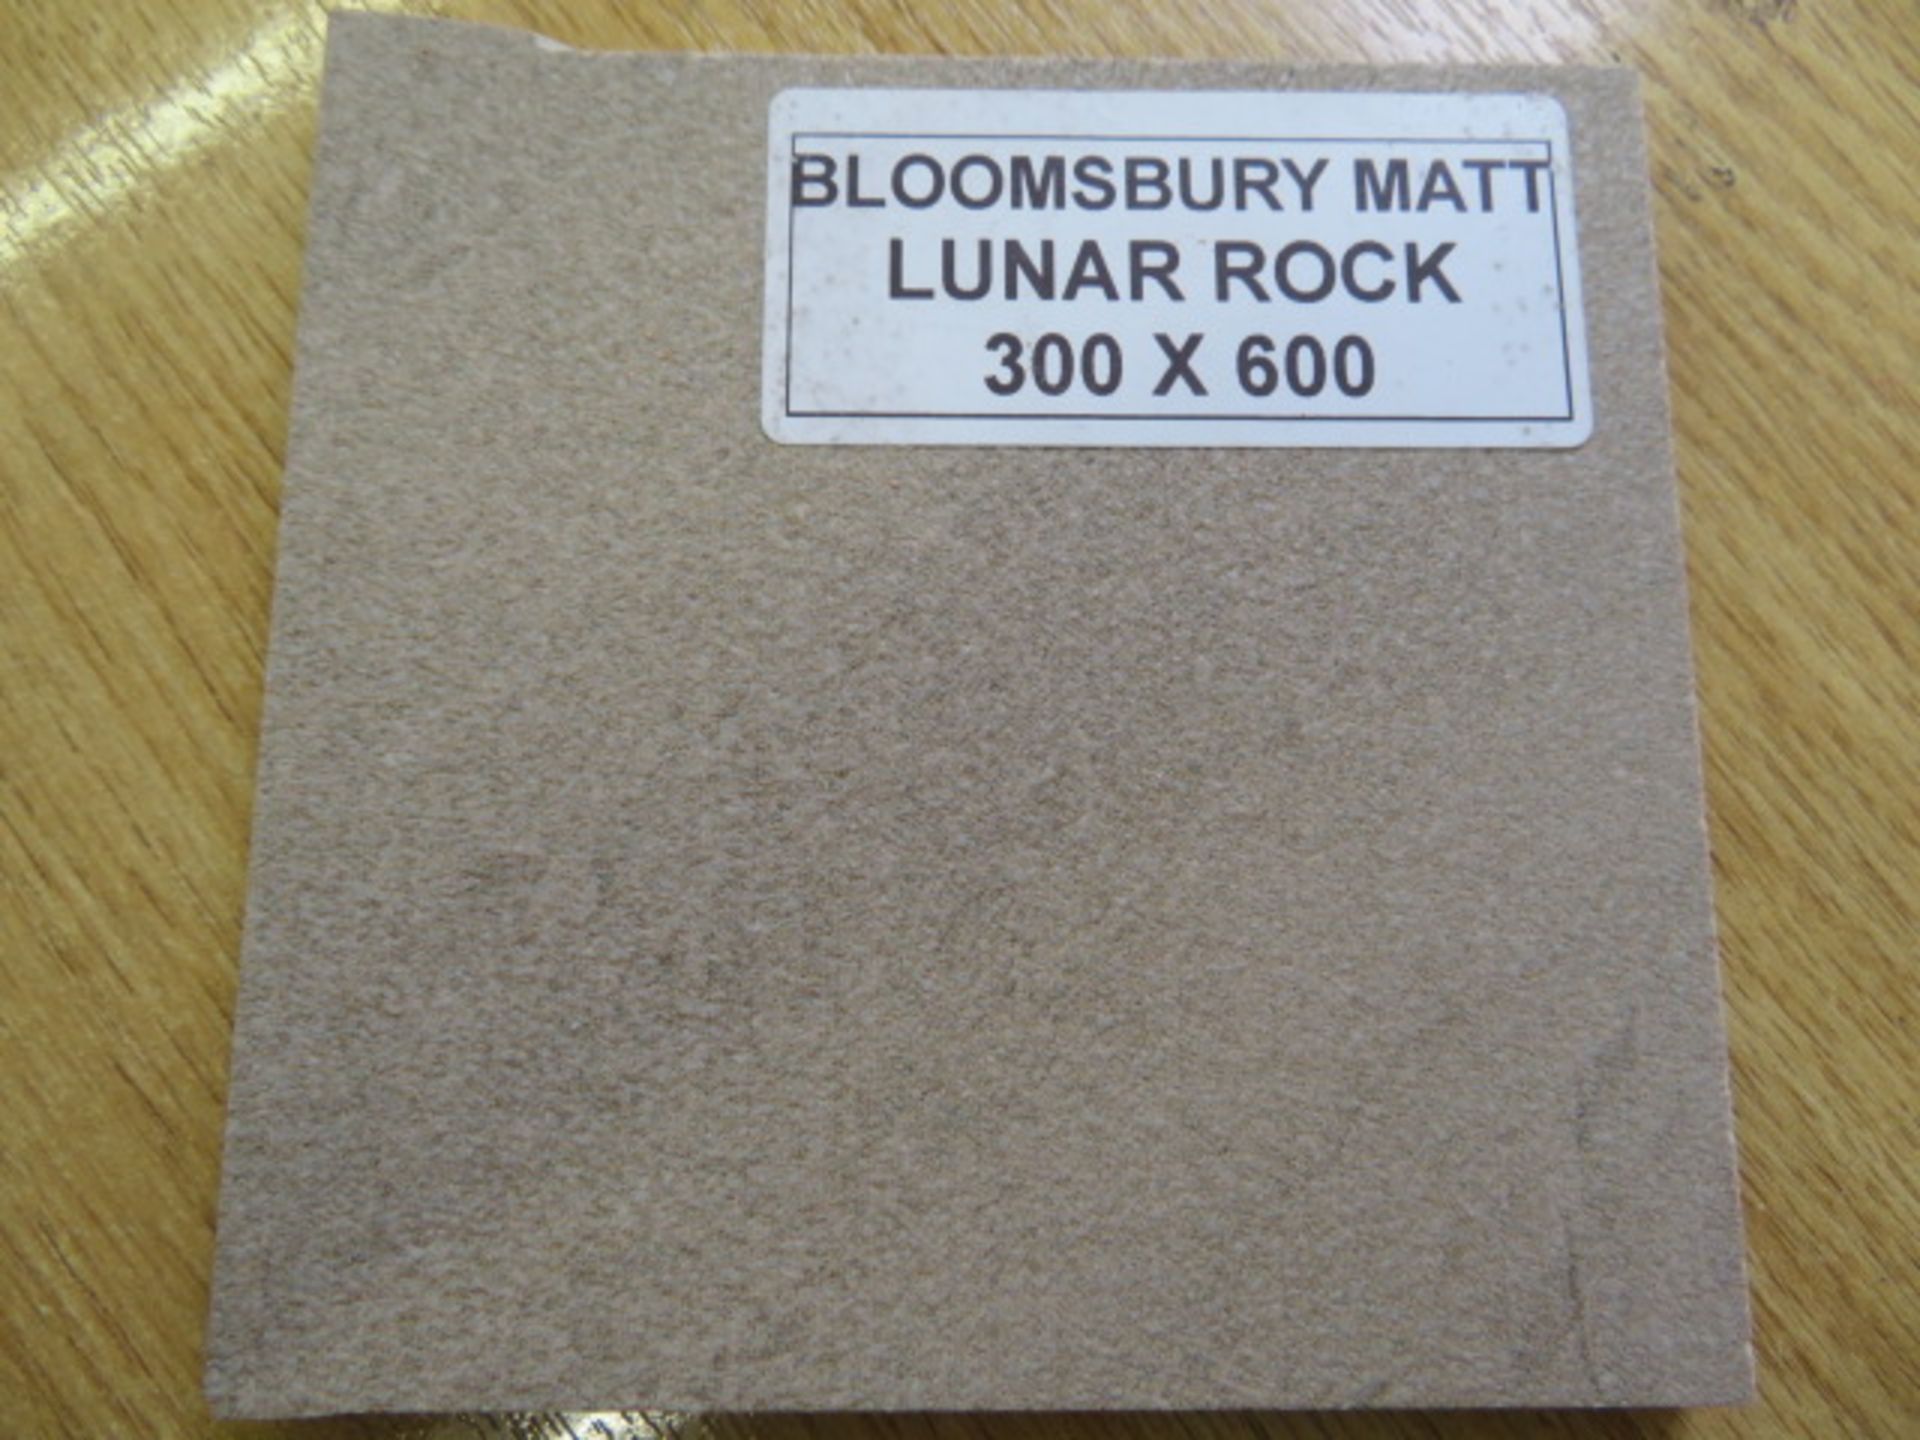 NEW 8.64 Square Meters of Bloomsbury Matte Lunar Rock Wall and Floor Tiles. 300x600mm per tile... - Image 2 of 3